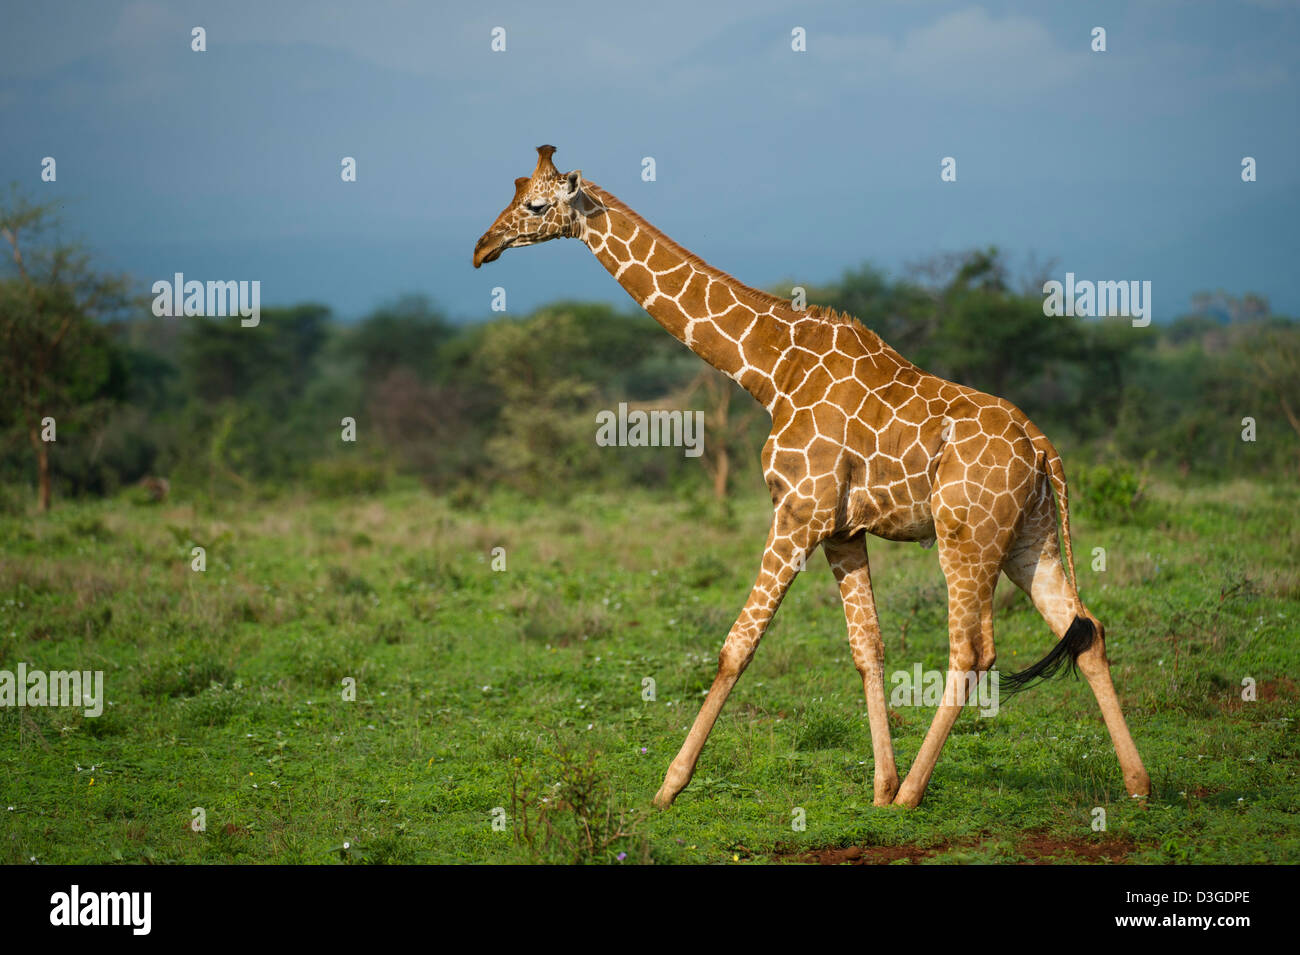 Jirafa reticulada ( Giraffa camelopardalis reticulata), Parque Nacional de Meru, Kenya Foto de stock